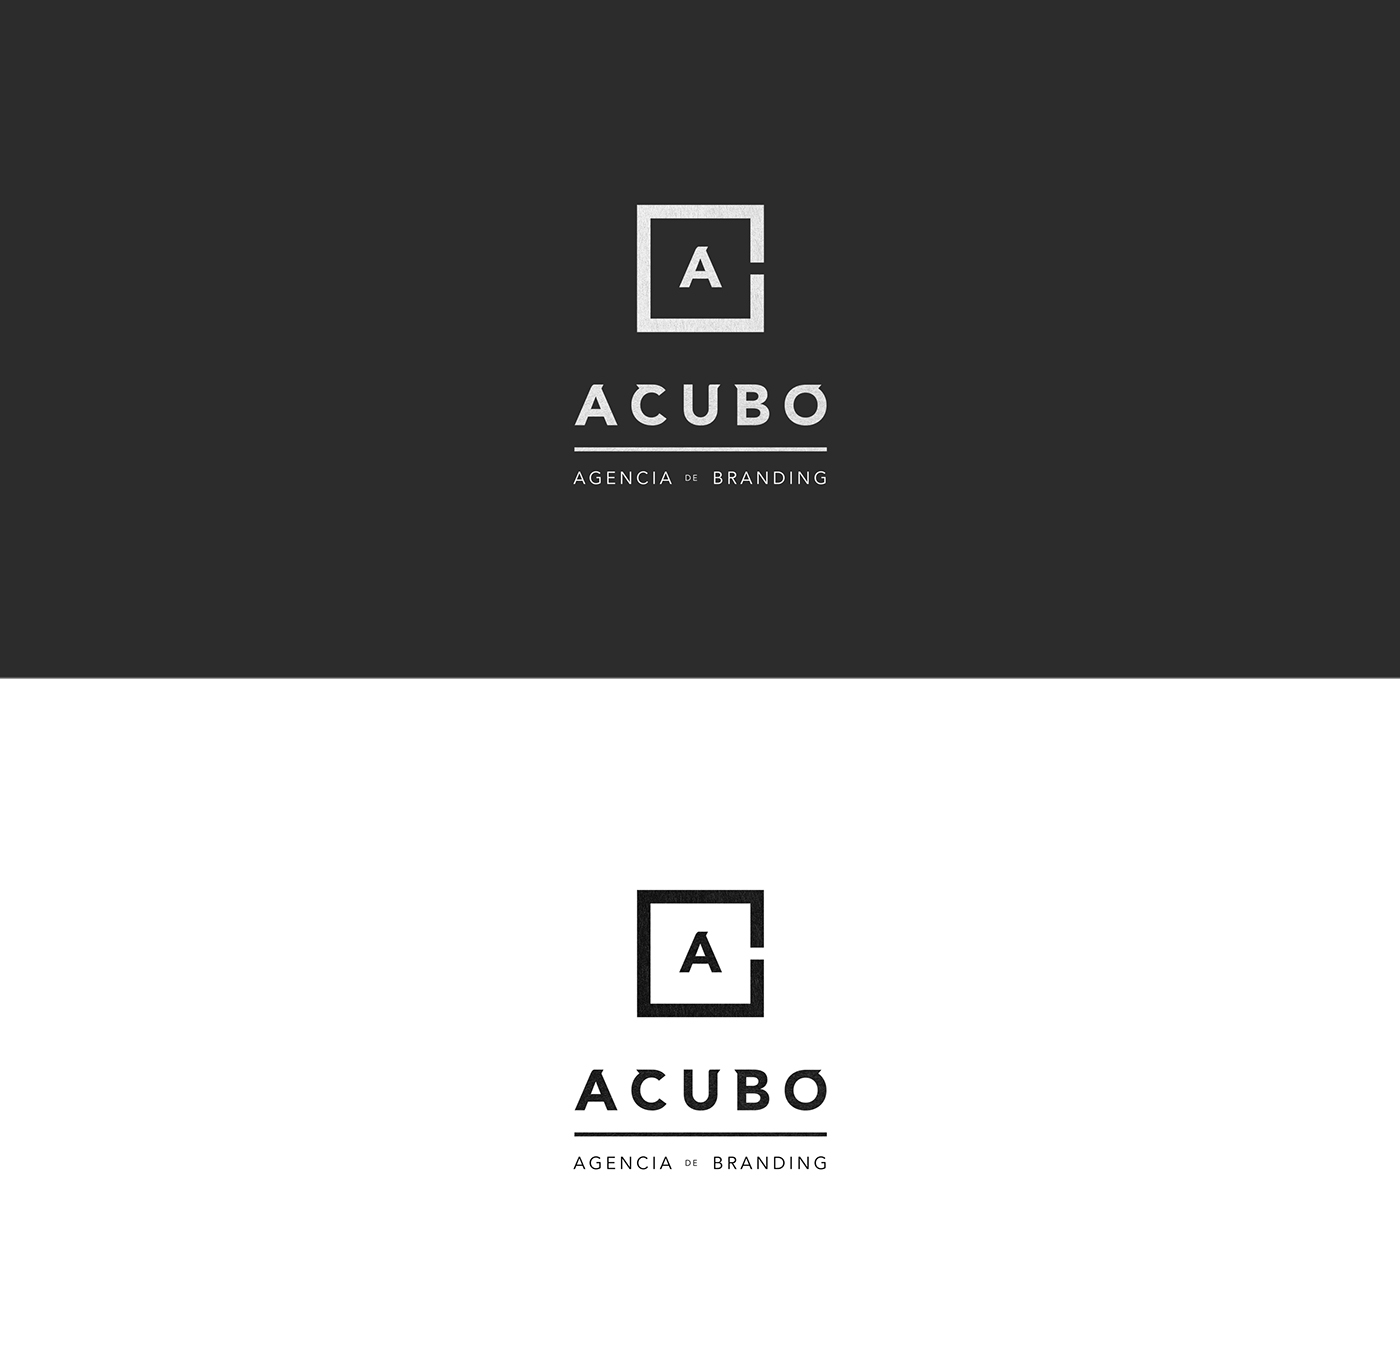 acubo studio agency agencia creativa branding 